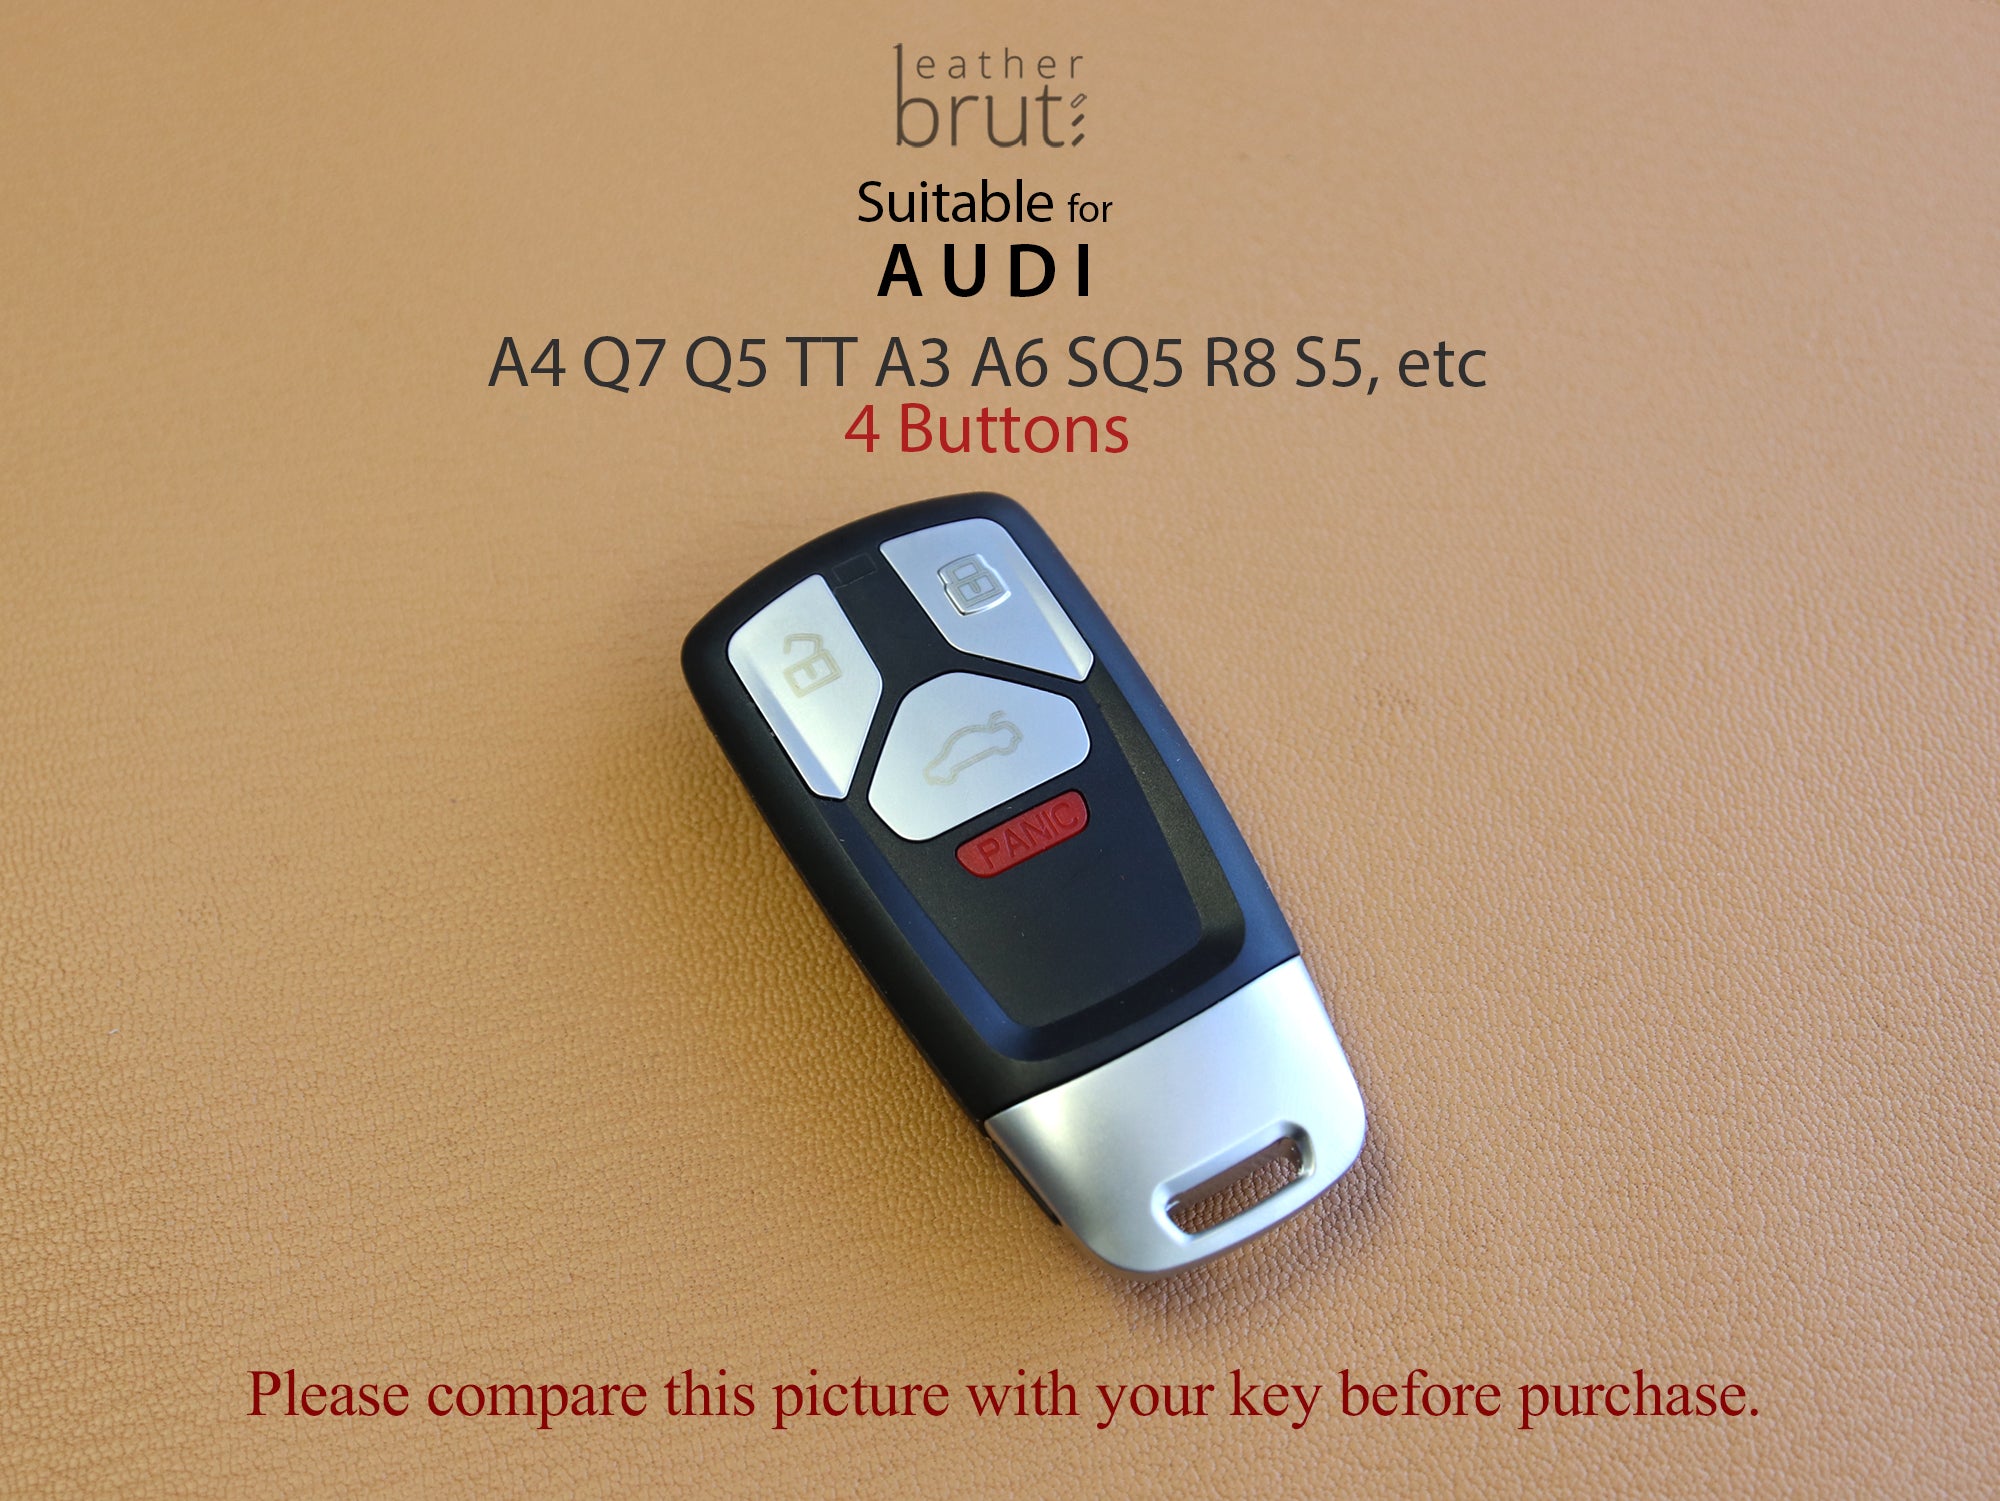 Audi Series [2] Key Fob Leather Case Fits A4 Q7 Q5 TT A3 A6 SQ5 R8 S5 –  Leather Brut